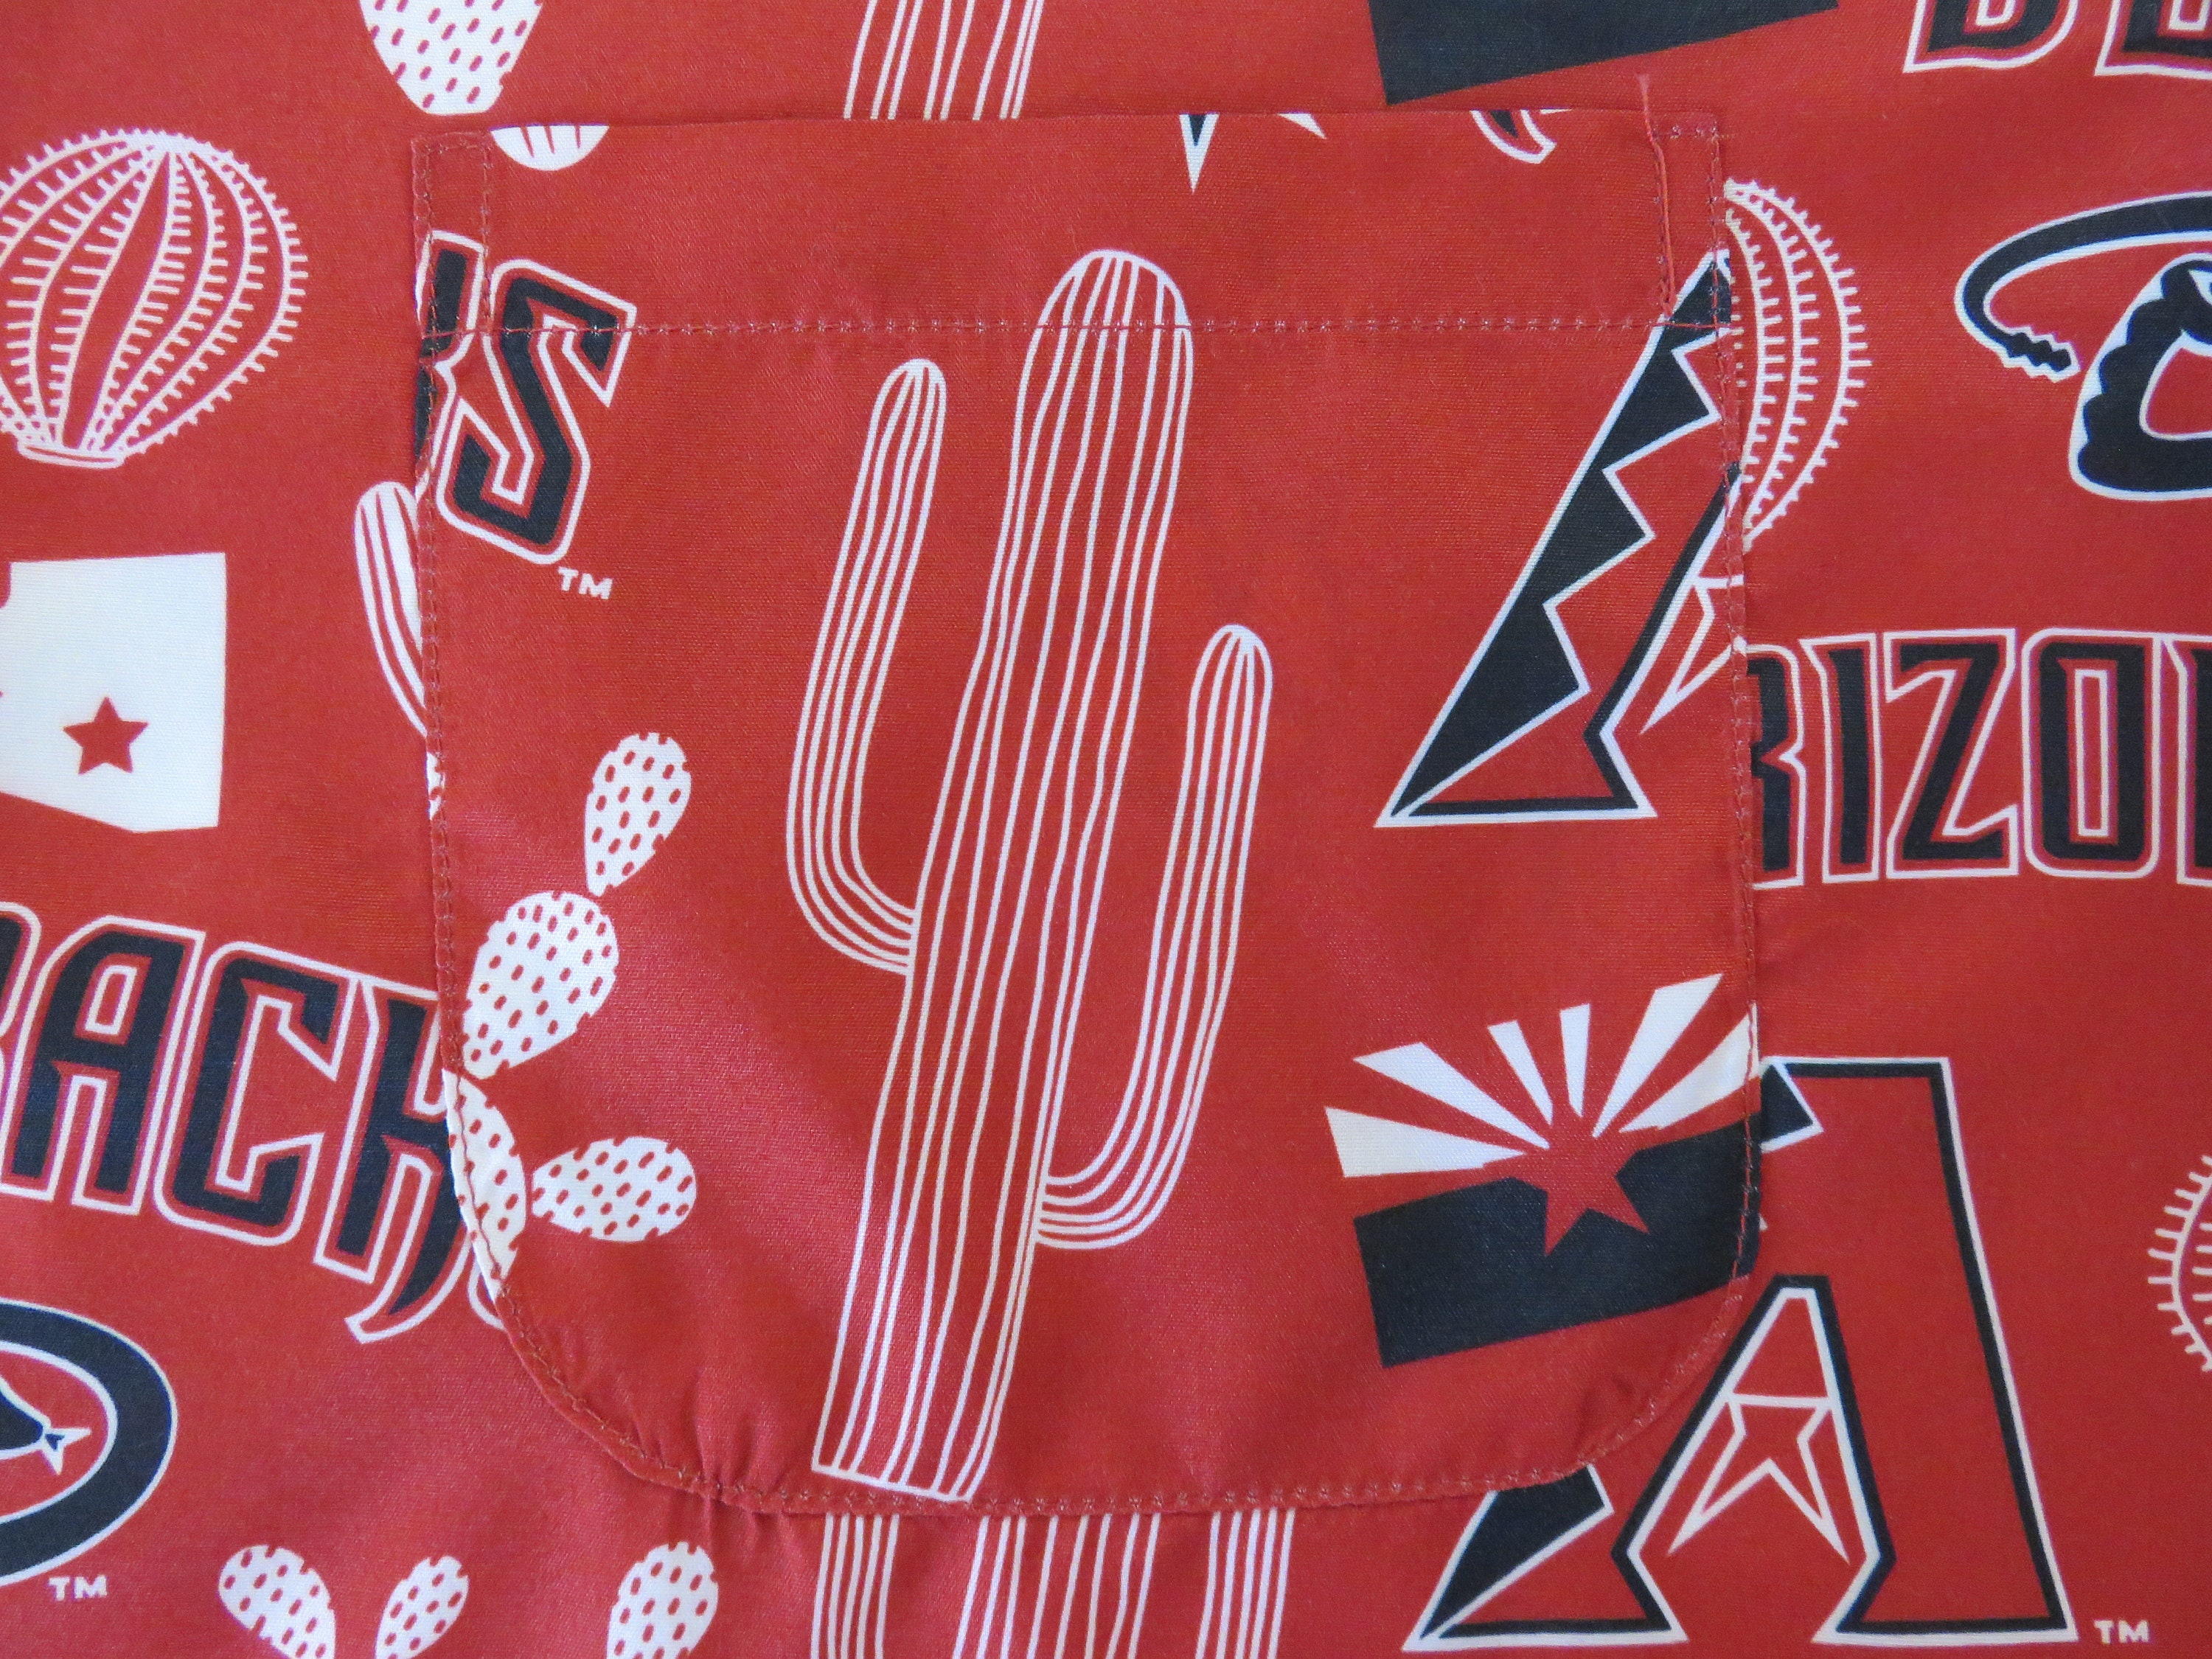 Arizona Diamondbacks MLB Hot Sports Summer Print Hawaiian Shirts For Fans -  Banantees